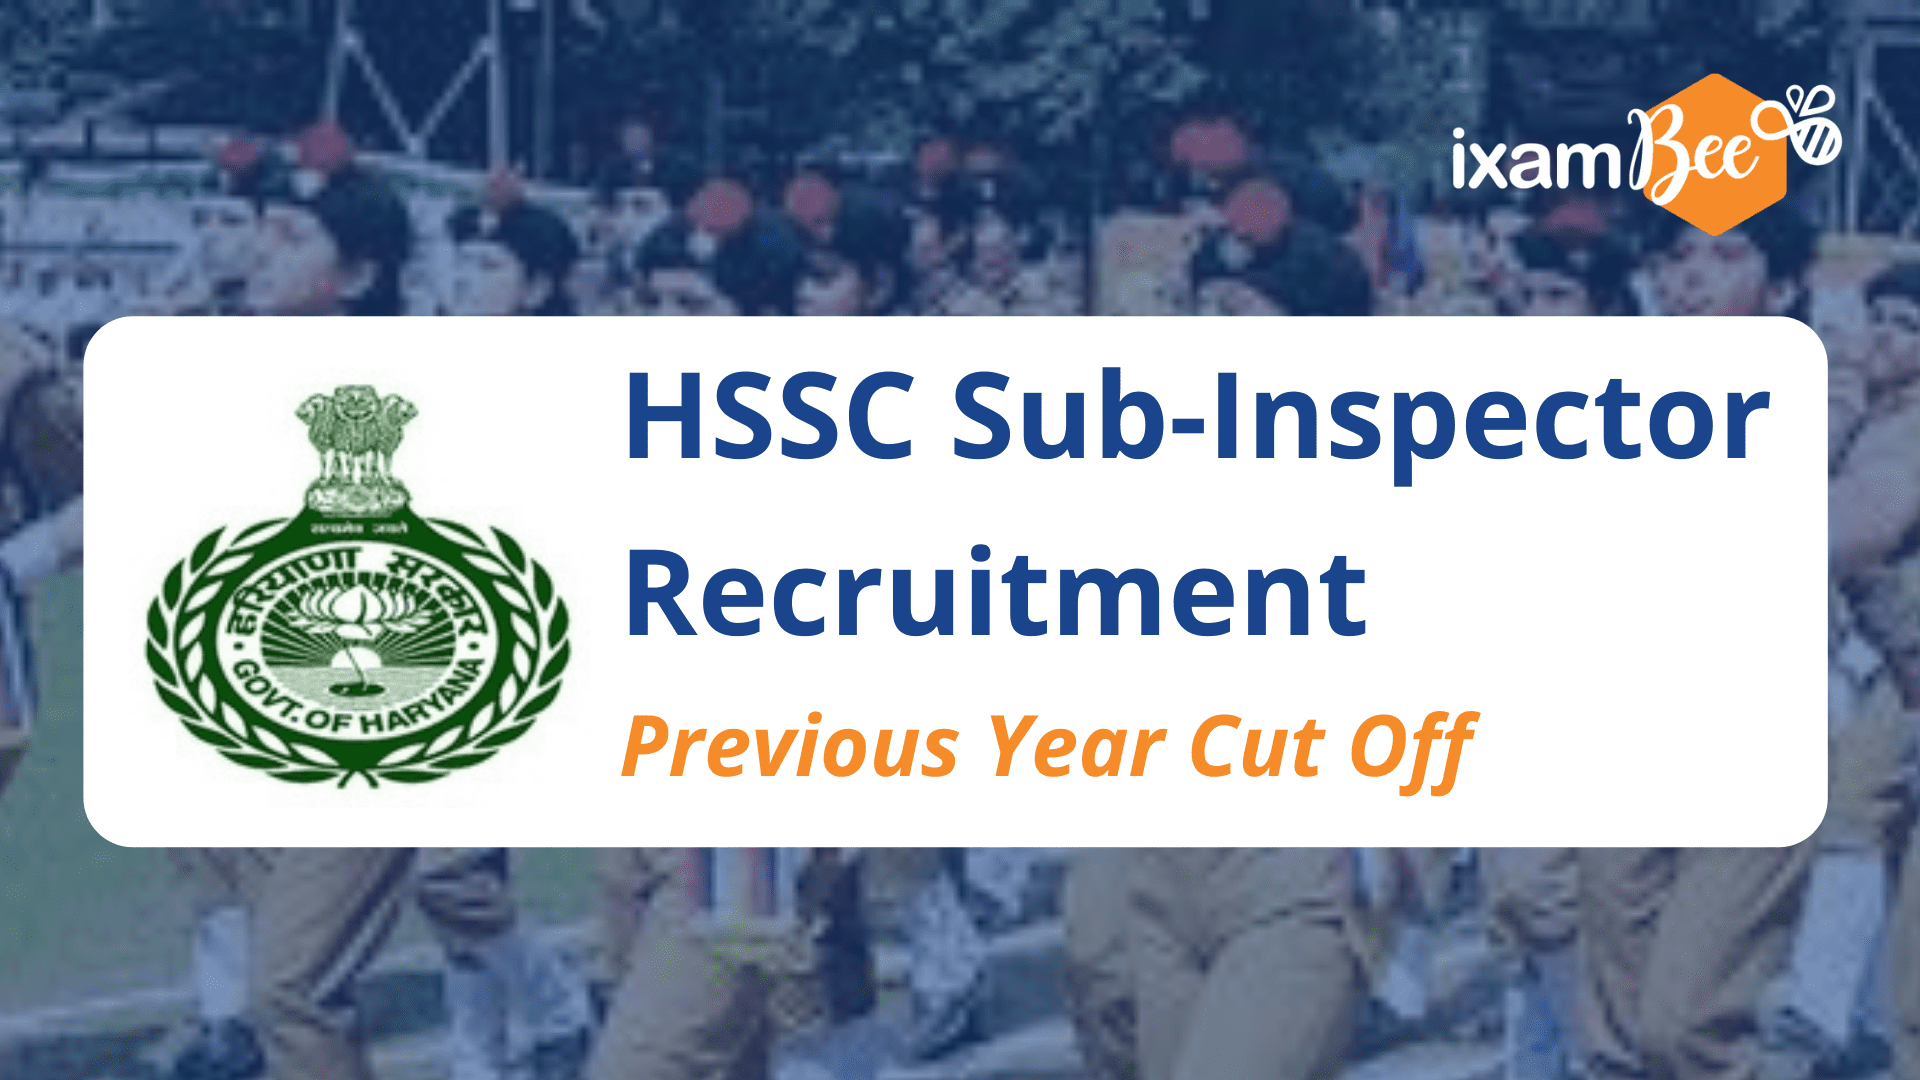 HSSC Sub-Inspector Recruitment Previous Year Cut Off